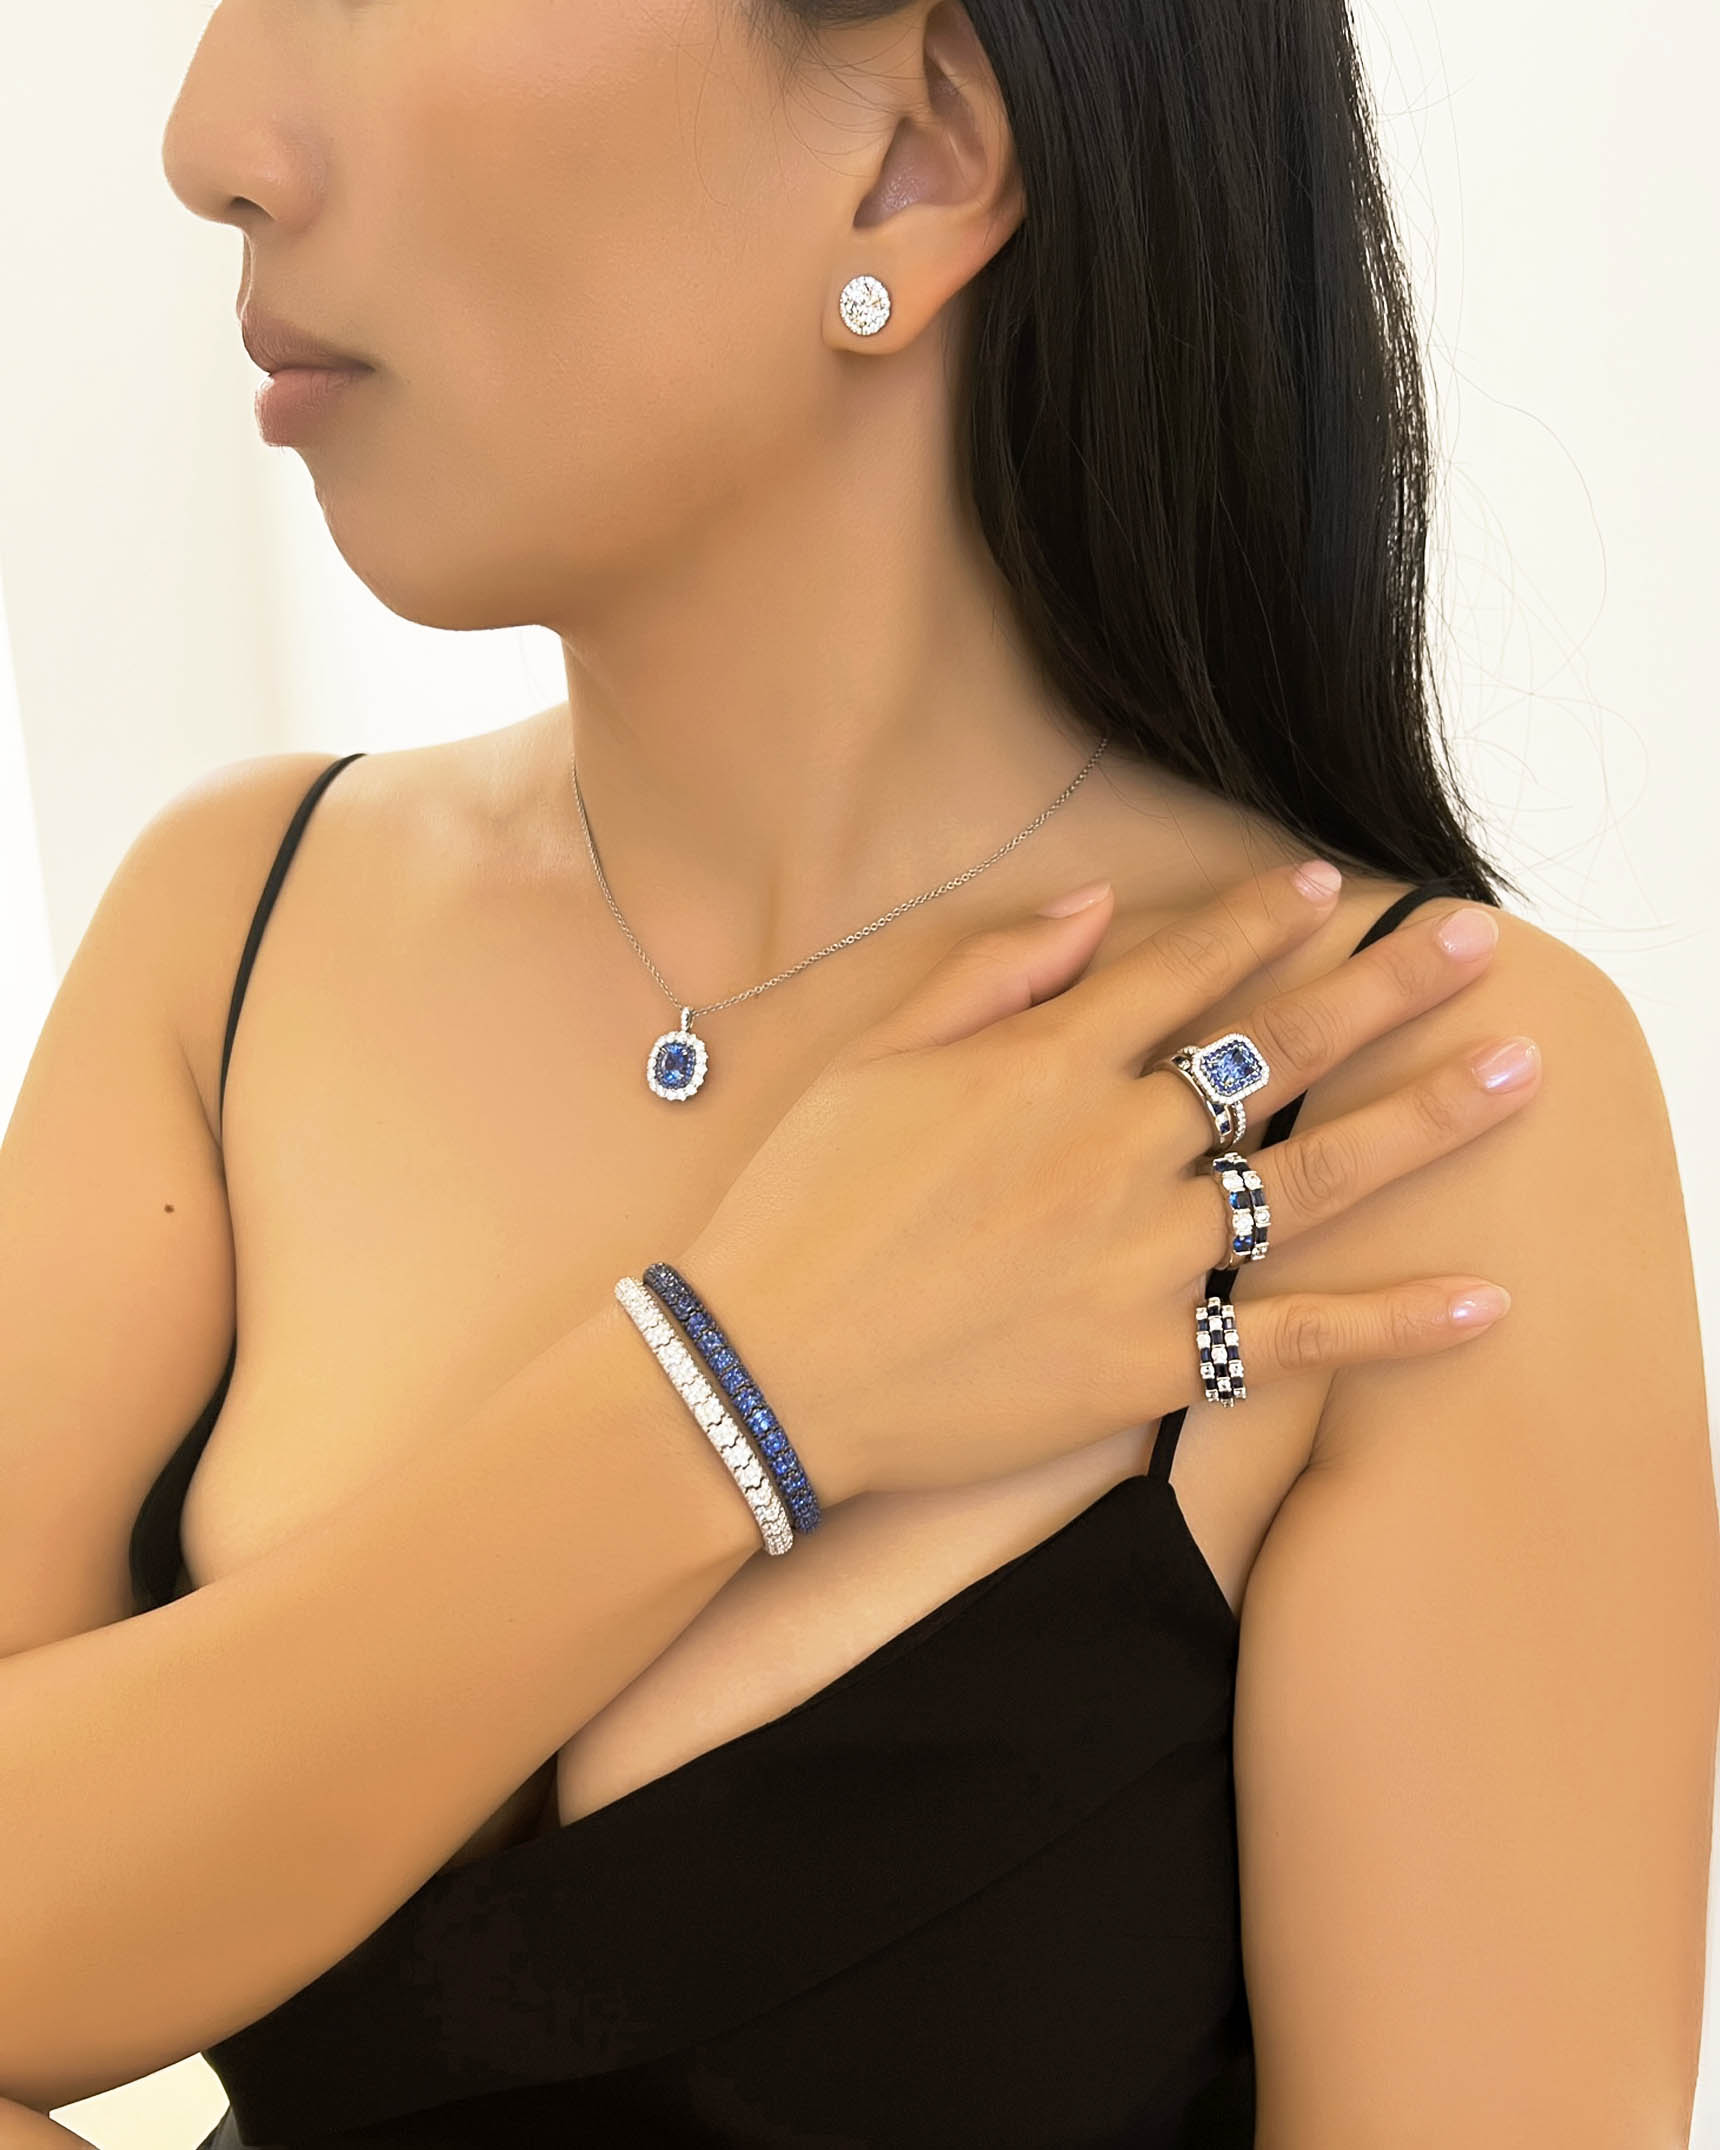 Blue Sapphire and Diamond Jewelry EDFKK05719 – RCDSA03098 – RACDS00778 – RACDS00851 – RACDS00844 – RACDS00976 – BCO3K00170 – BDOTK05158 – PNC6K01820 (second look)